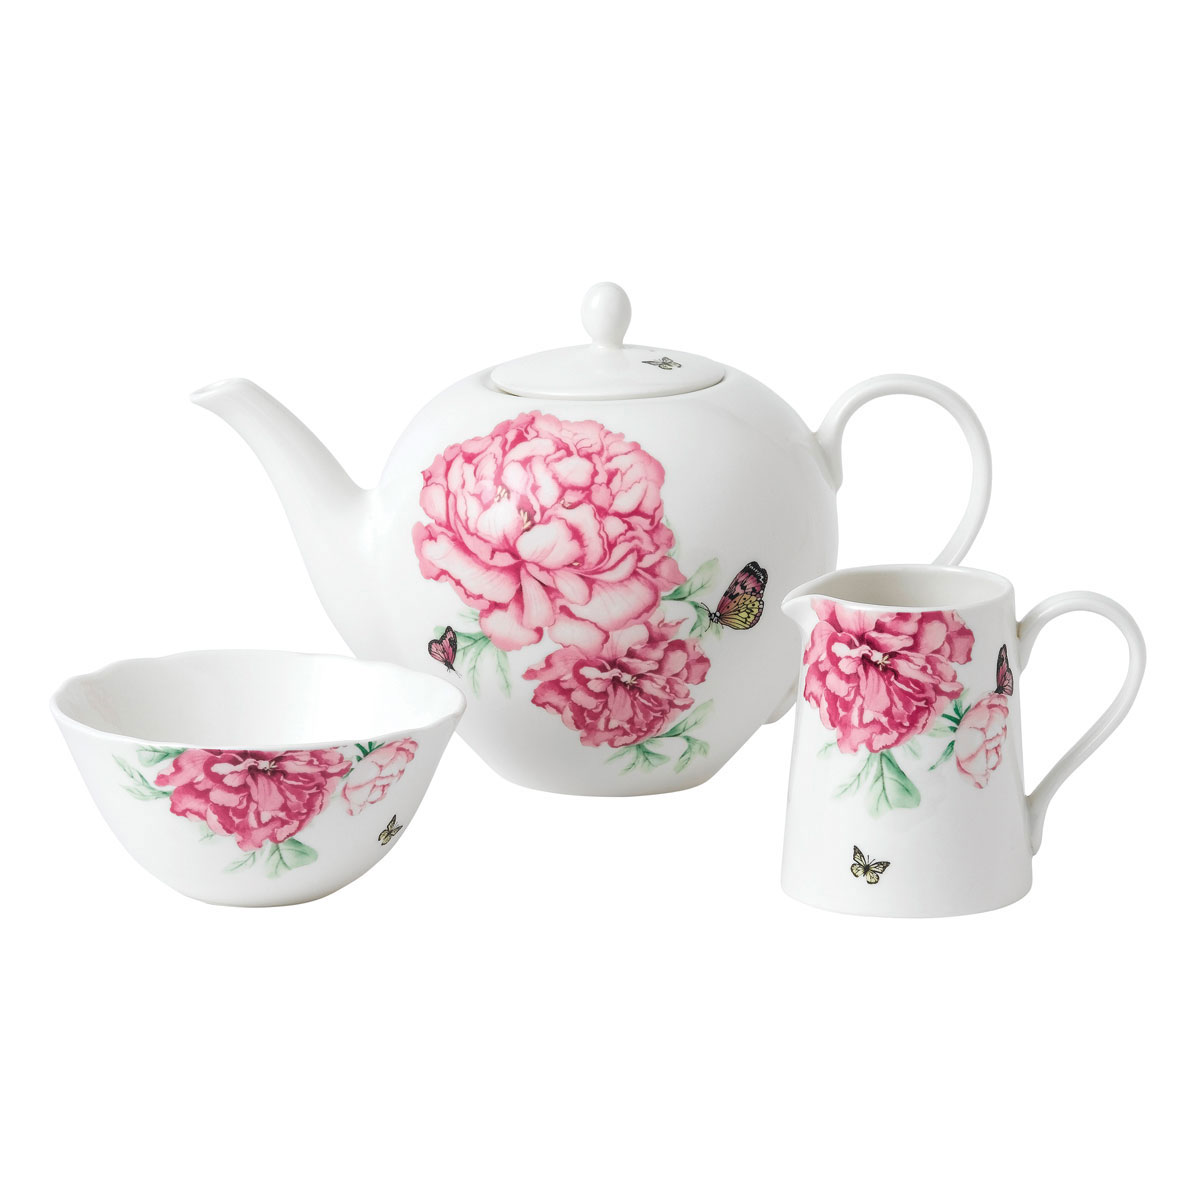 Royal Albert Everyday Friendship Teapot, Sugar and Creamer Set White